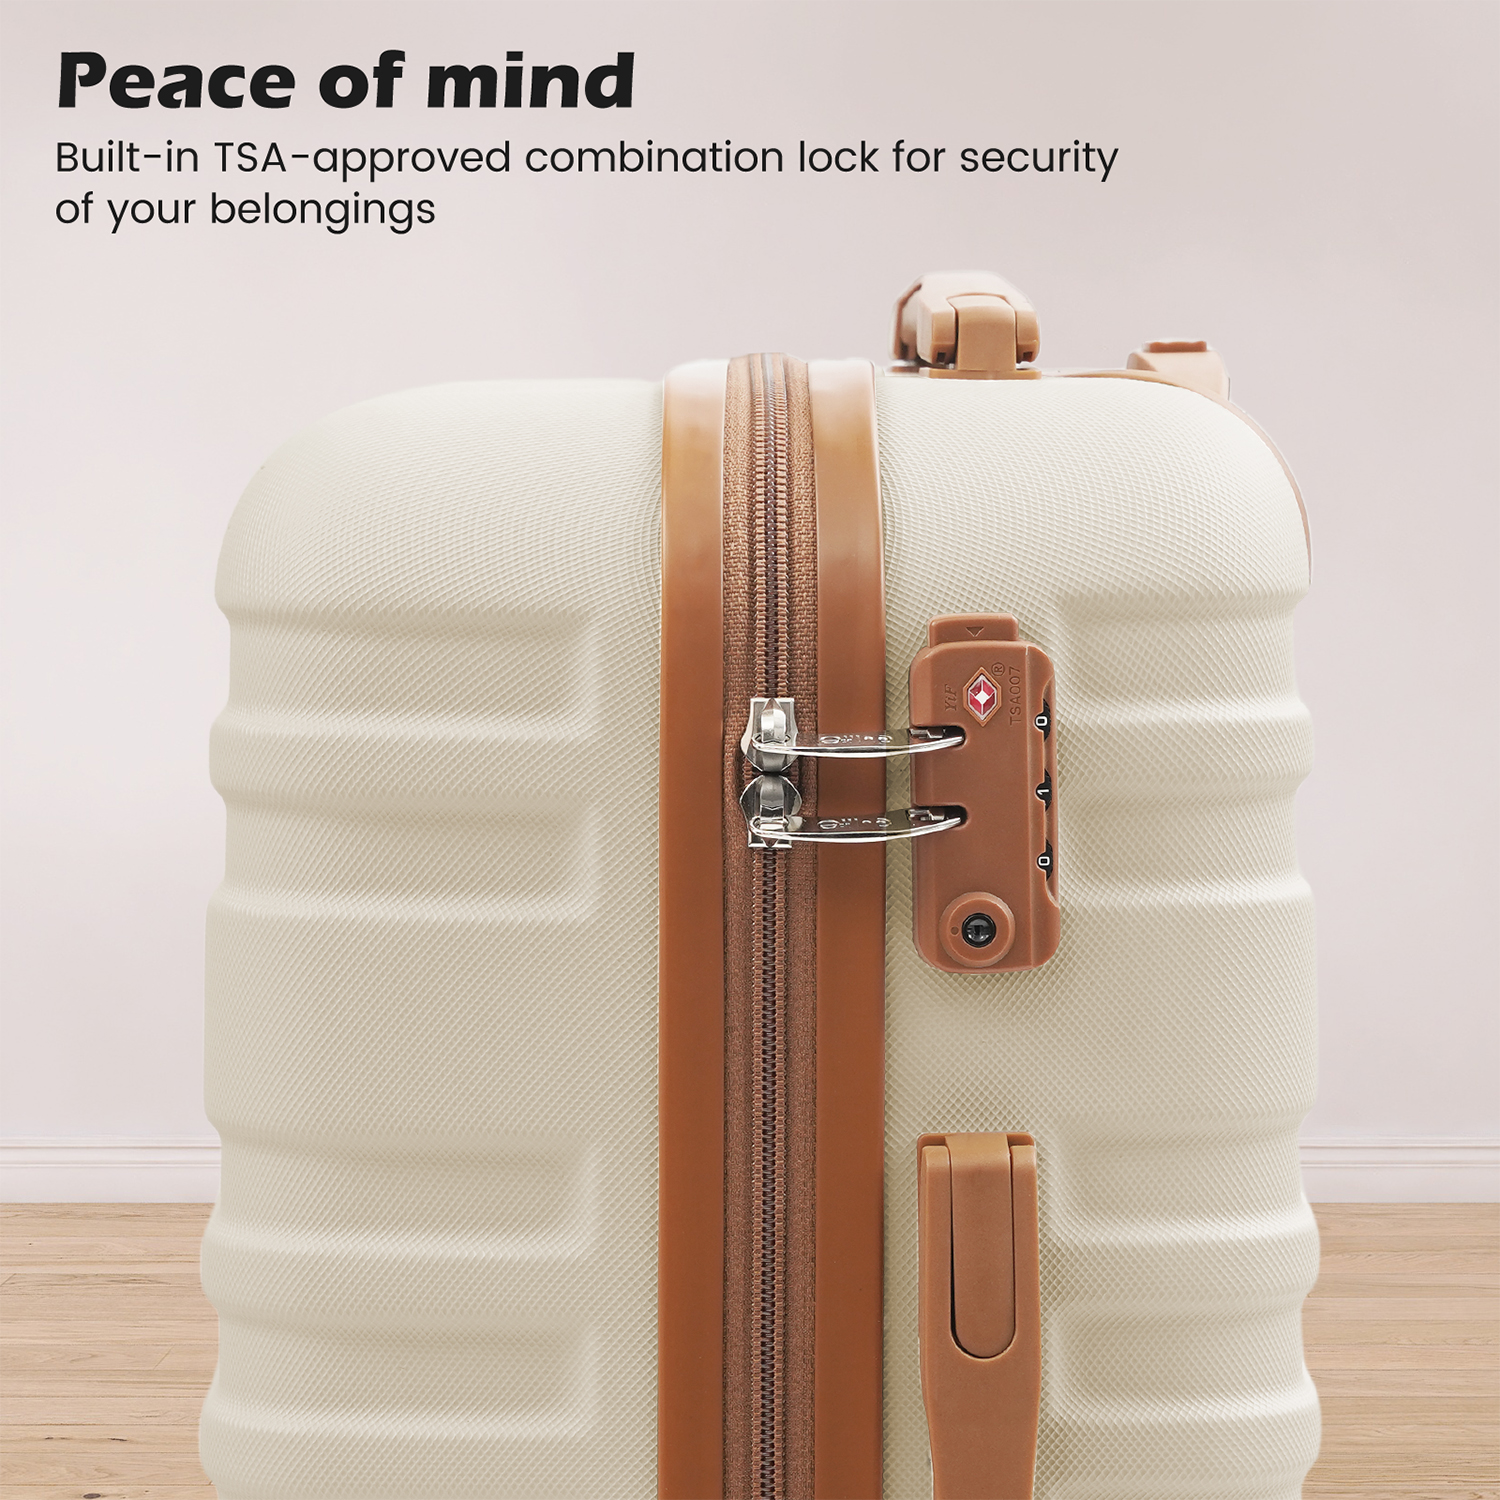 Coolife Luggage Sets Suitcase Set 3 Piece Luggage Set Carry On Hardside Luggage with TSA Lock Spinner Wheels (3 piece set (BP/TB/20))